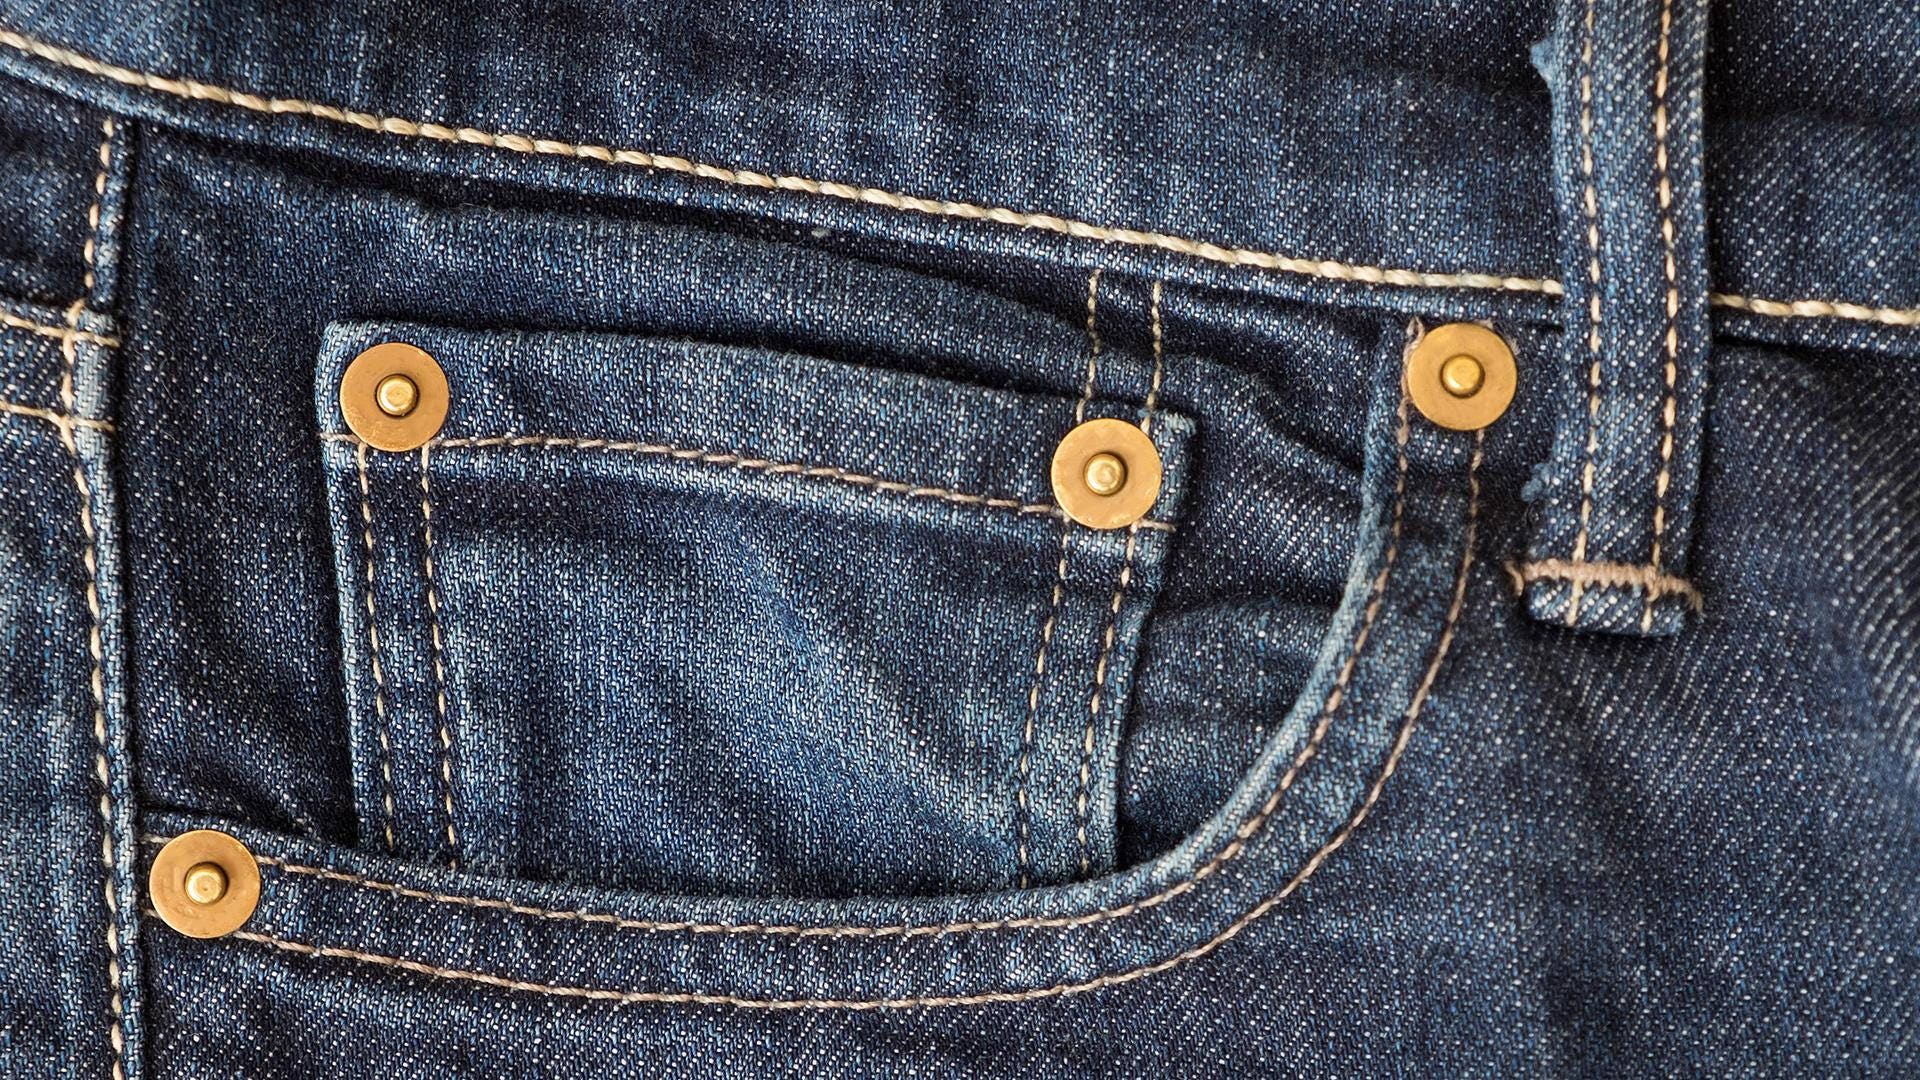 Rivet jeans - .de